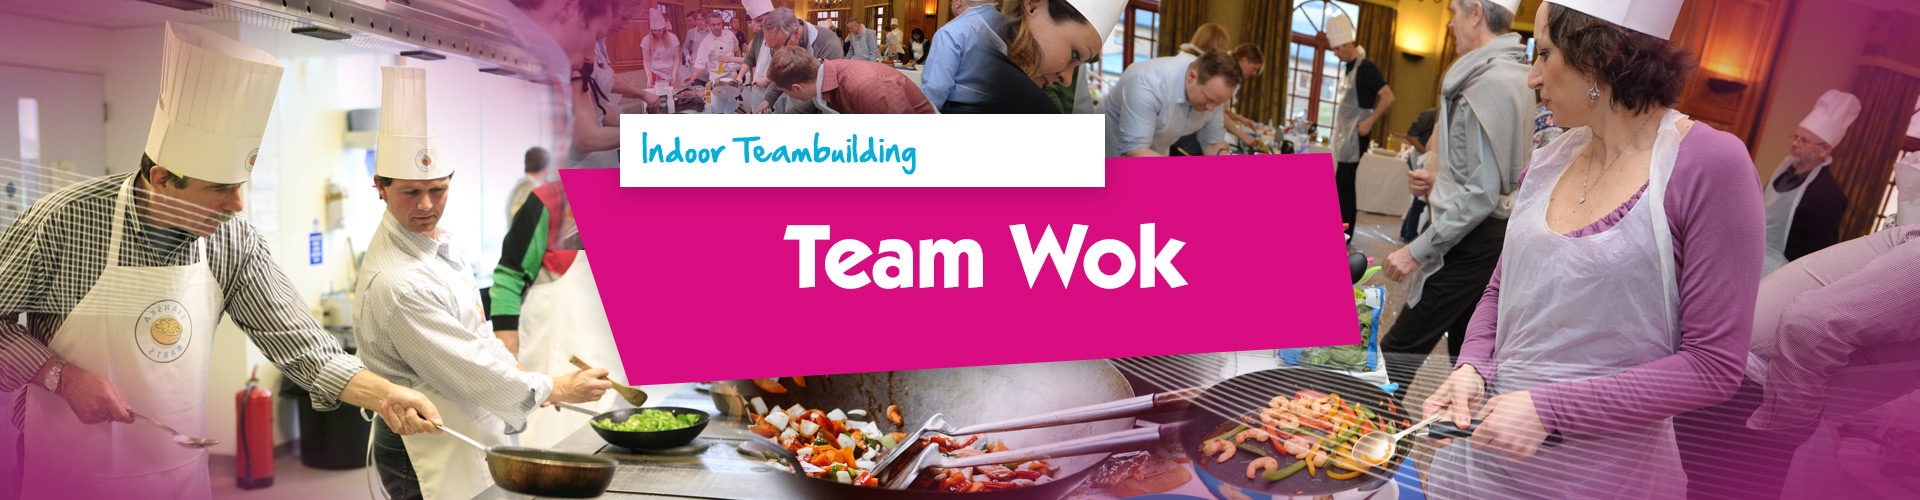 Teambuilding | Team Wok